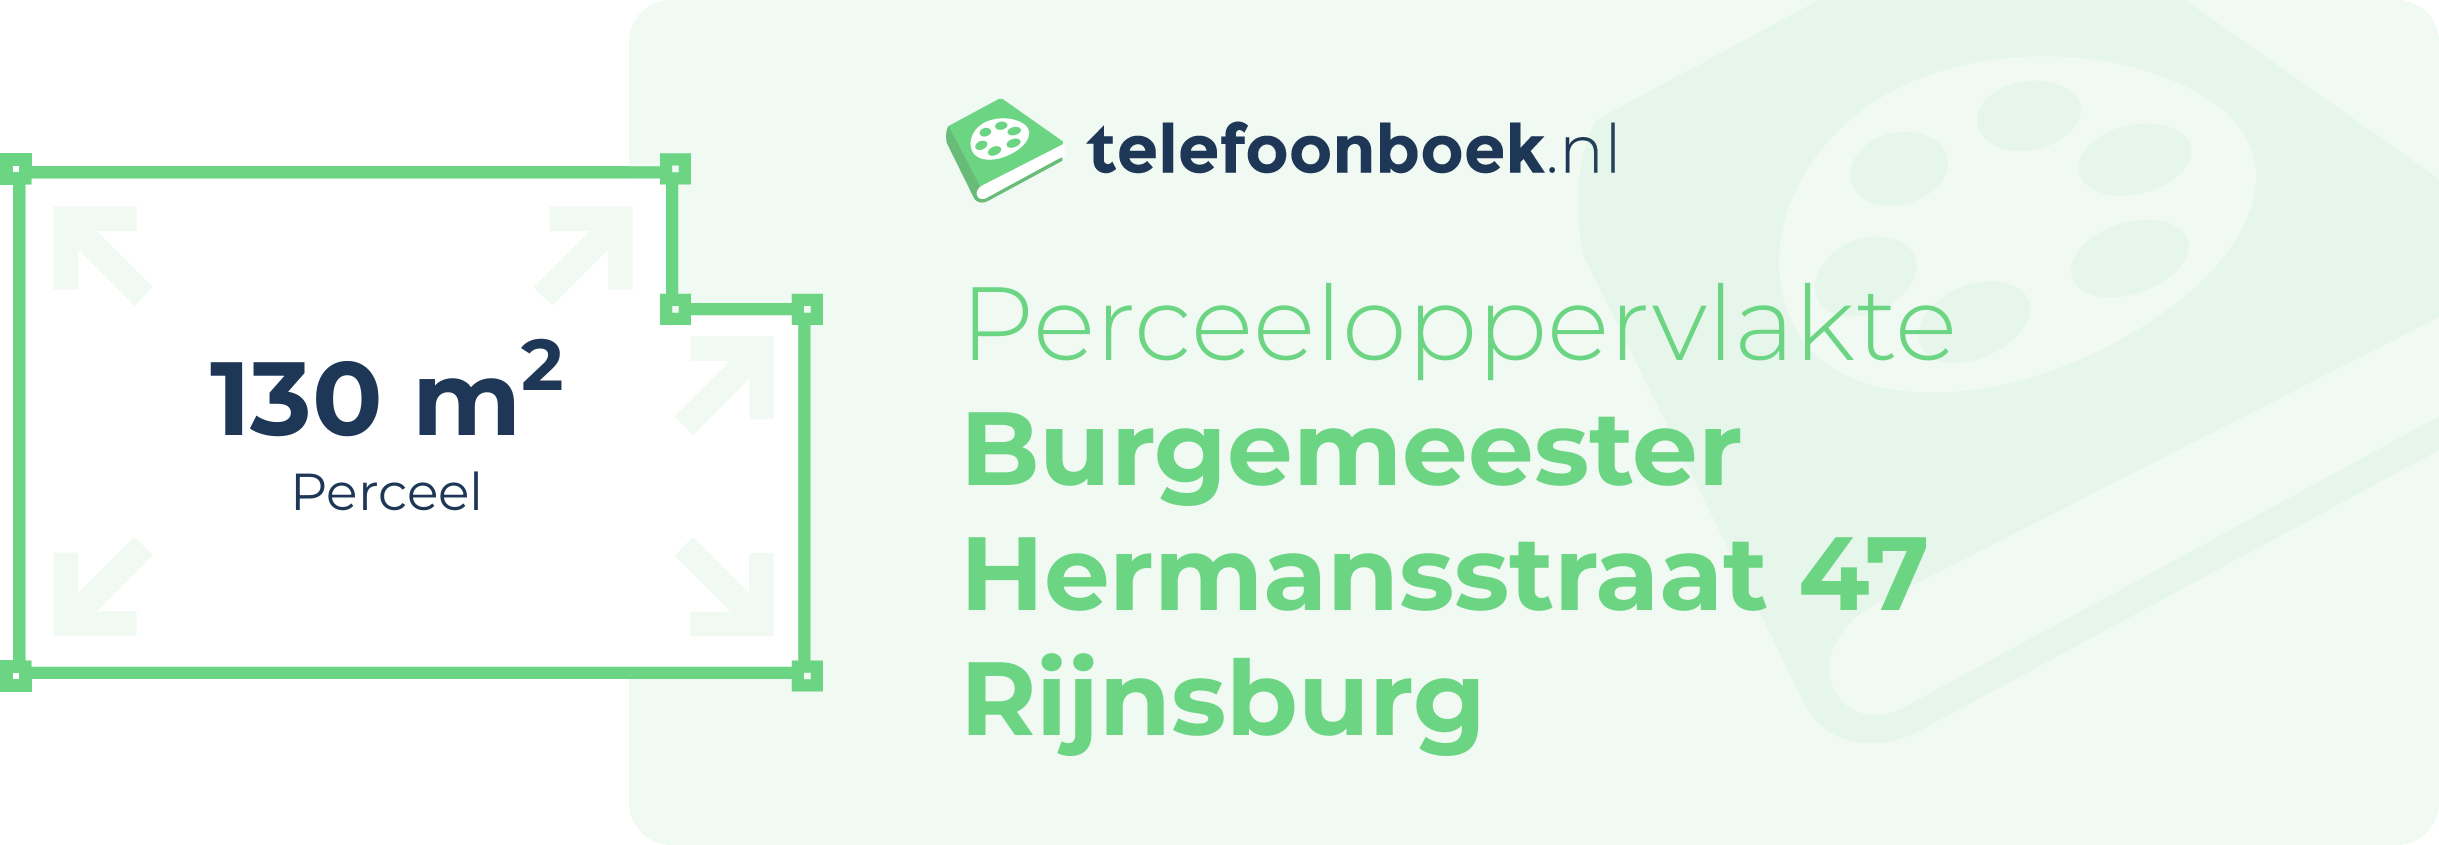 Perceeloppervlakte Burgemeester Hermansstraat 47 Rijnsburg